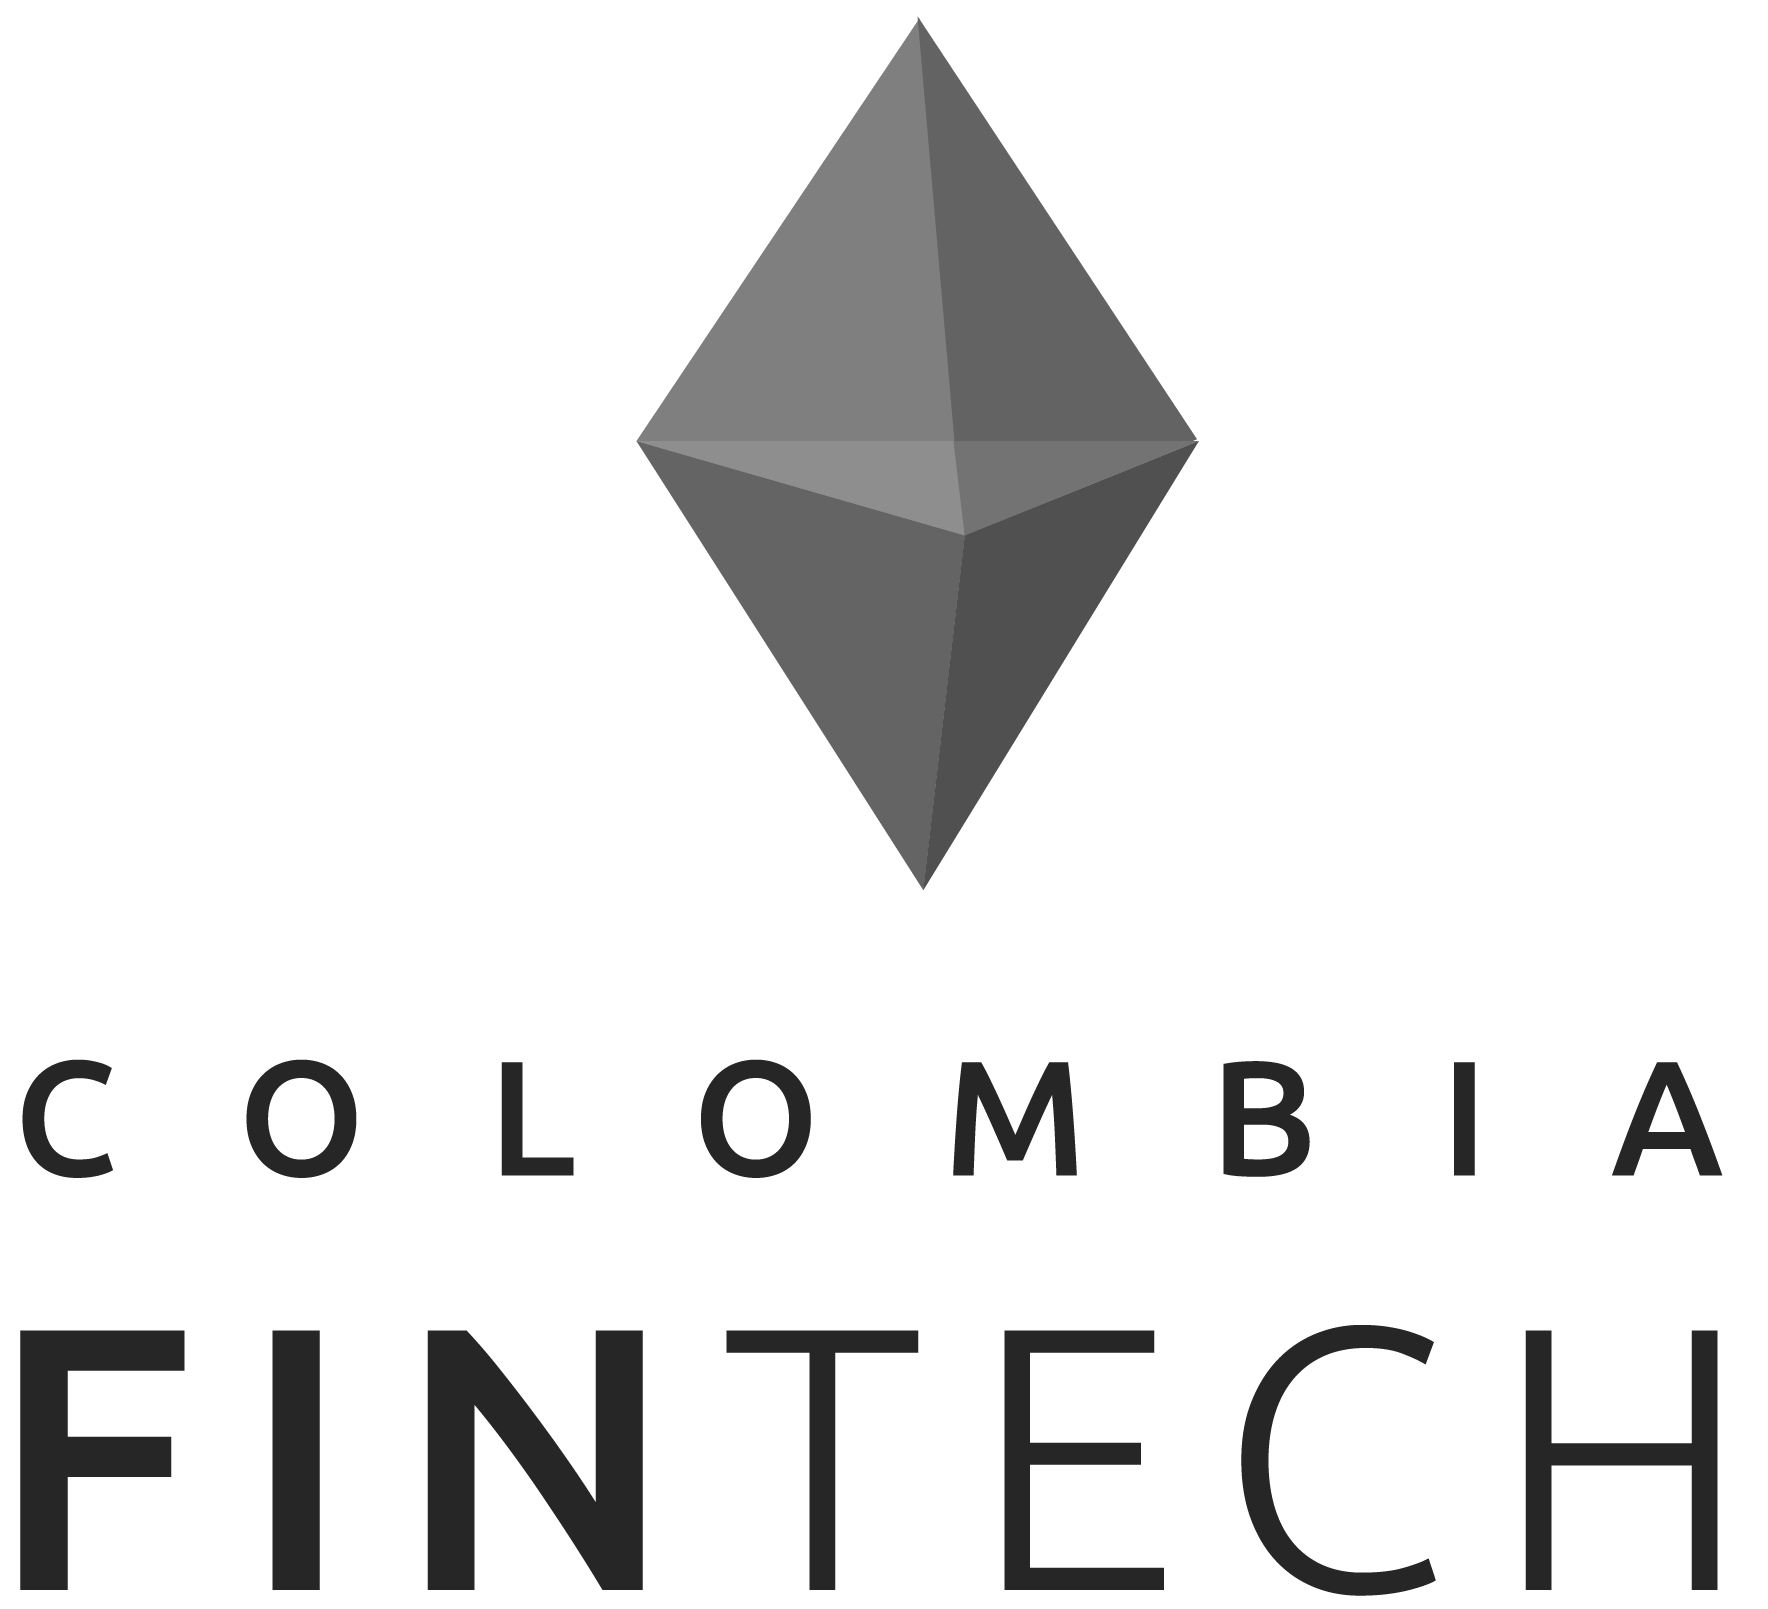 Fintech Colombia